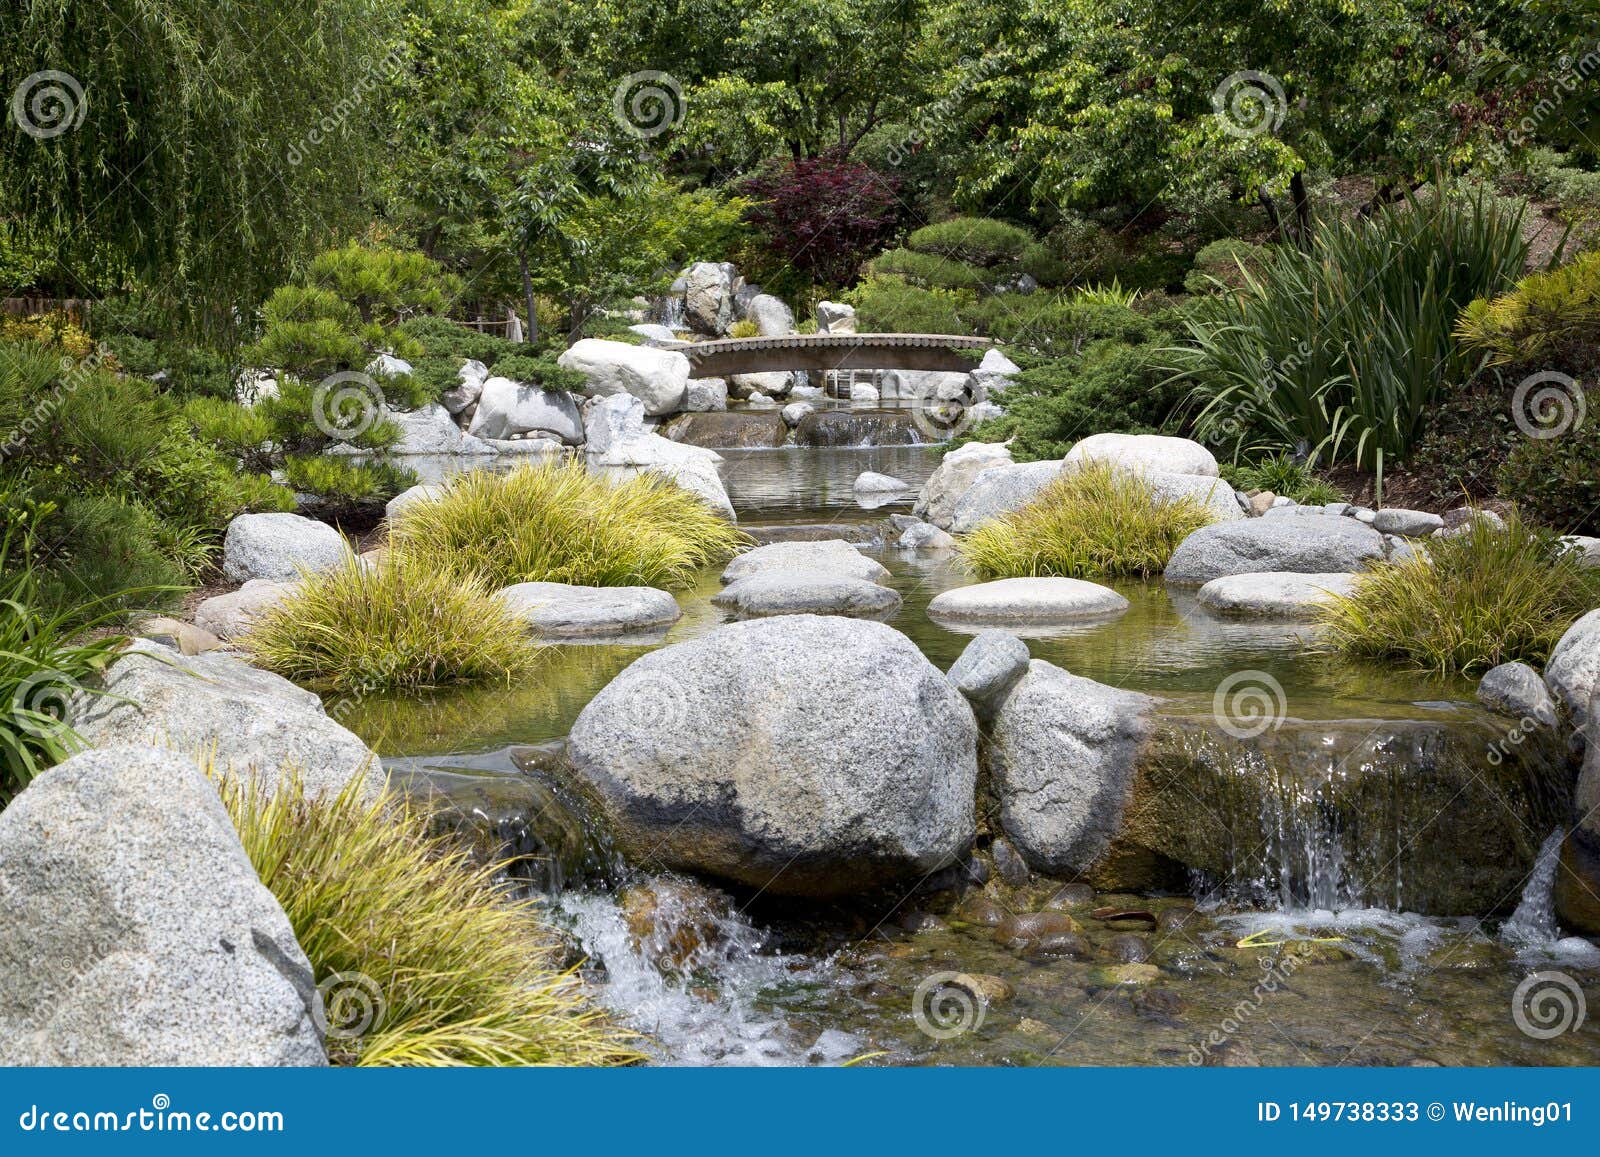 Japanese Friendship Garden Waterfall In Balboa Park View Stock